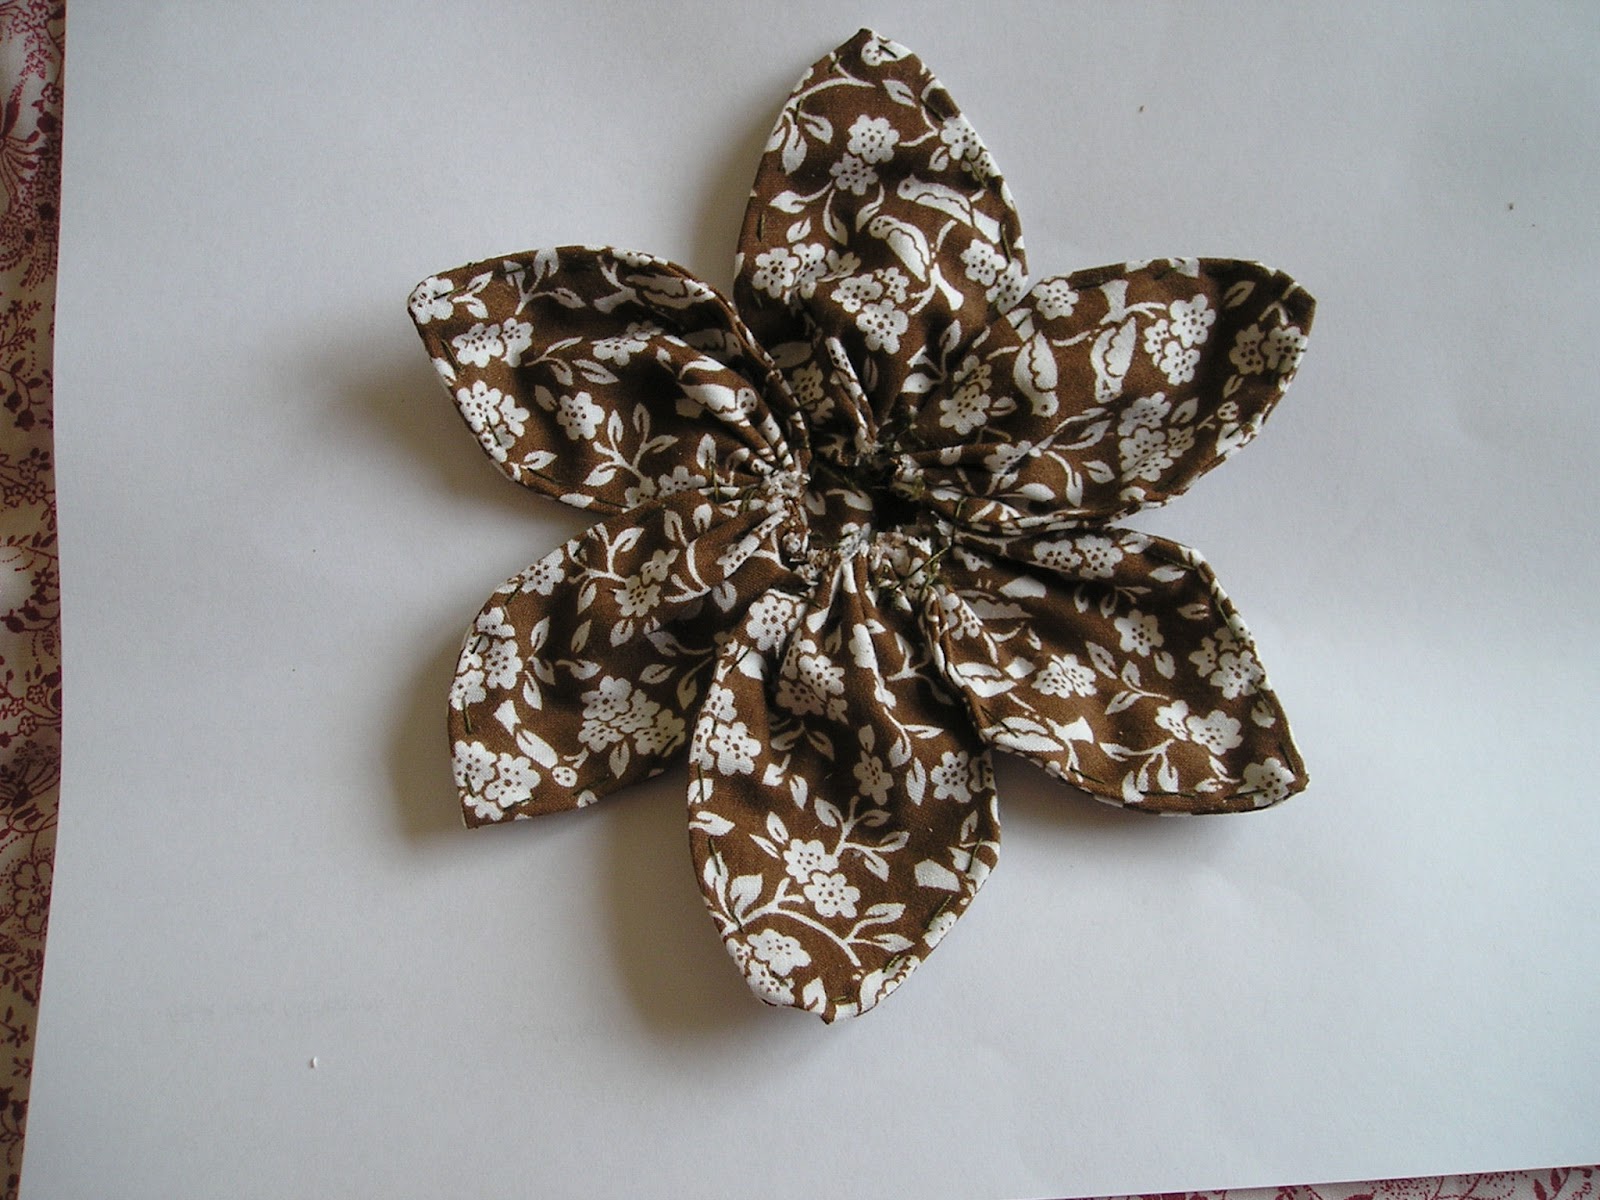 Jumbled Crafts: Rustic Sewn Flowers